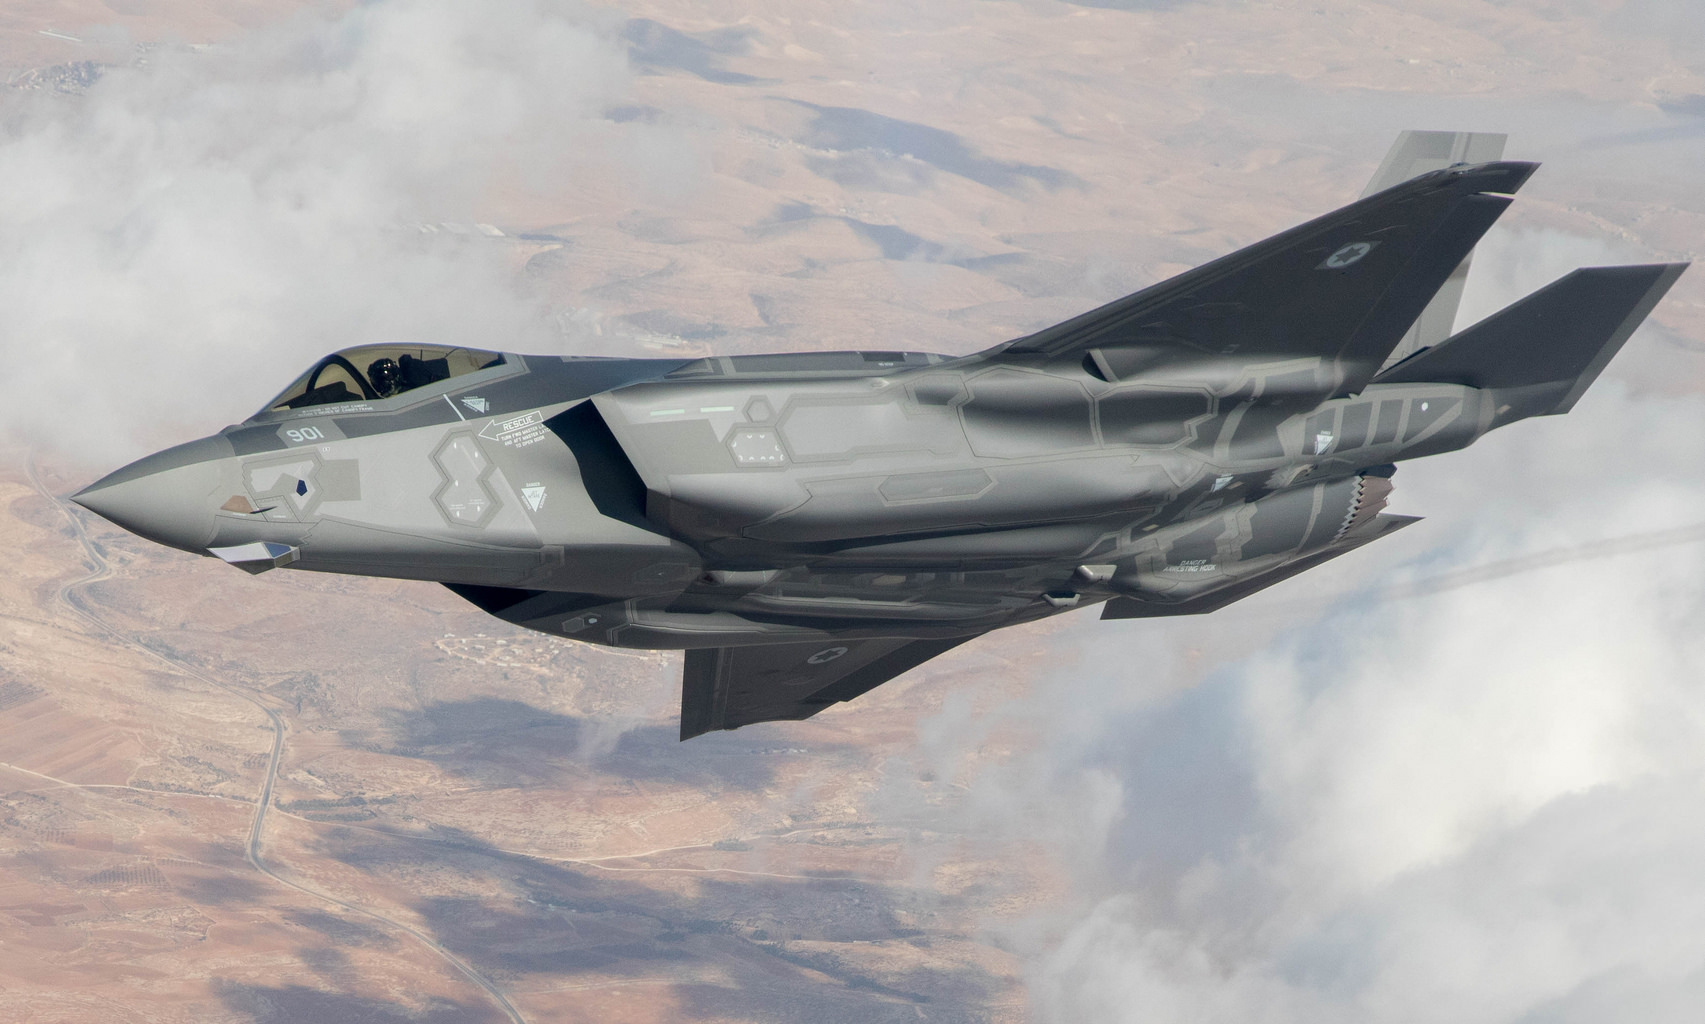 Eτοιμο το Ισραήλ να κτυπήσει με F-35 -Οι S-300 της Συρίας ενώνονται με το Σύστημα Διοίκησης και Ελέγχου C3 της Ρωσίας